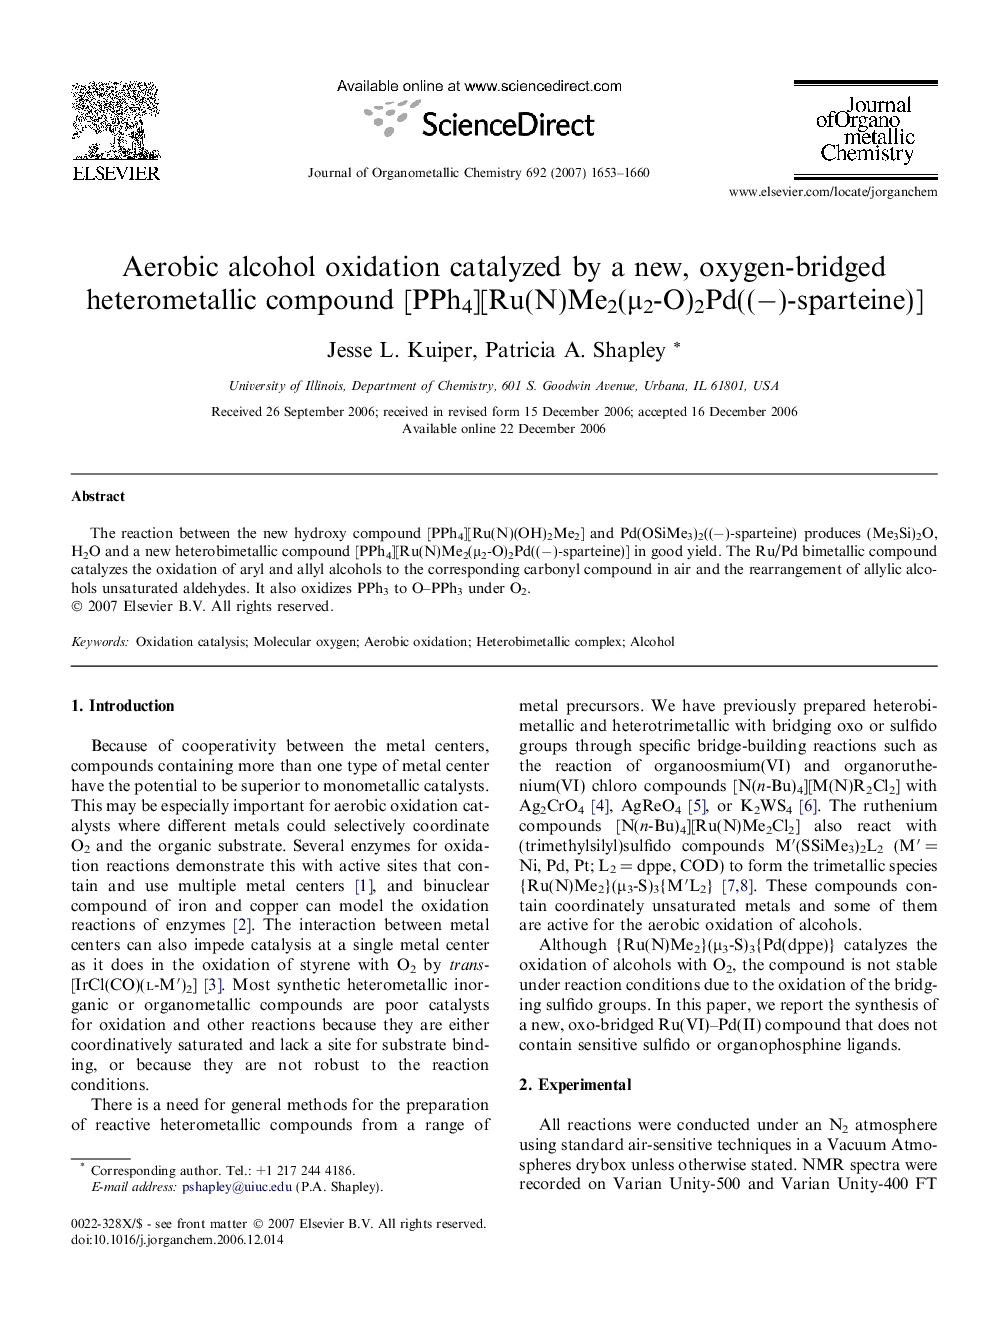 Aerobic alcohol oxidation catalyzed by a new, oxygen-bridged heterometallic compound [PPh4][Ru(N)Me2(Î¼2-O)2Pd((â)-sparteine)]